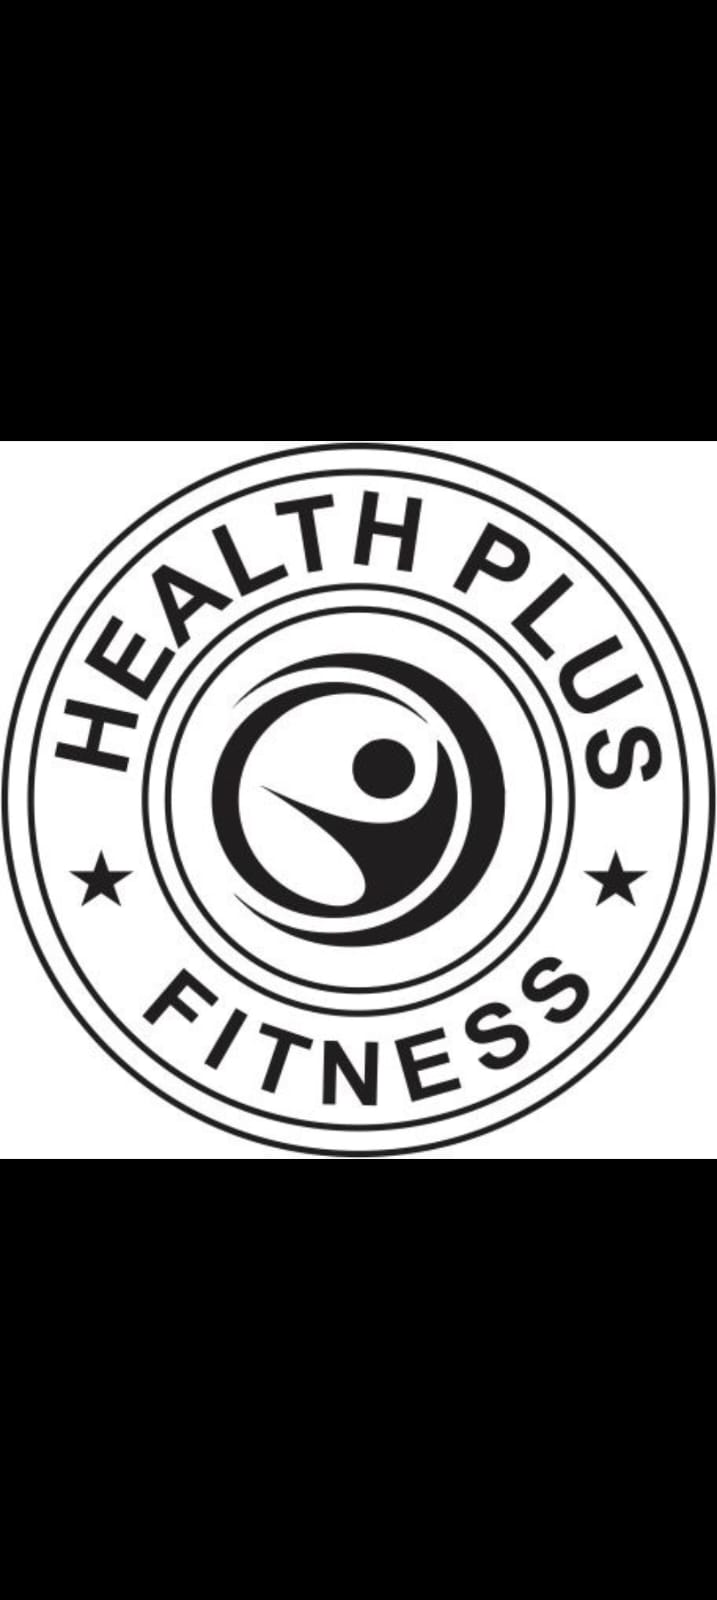 Health Plus